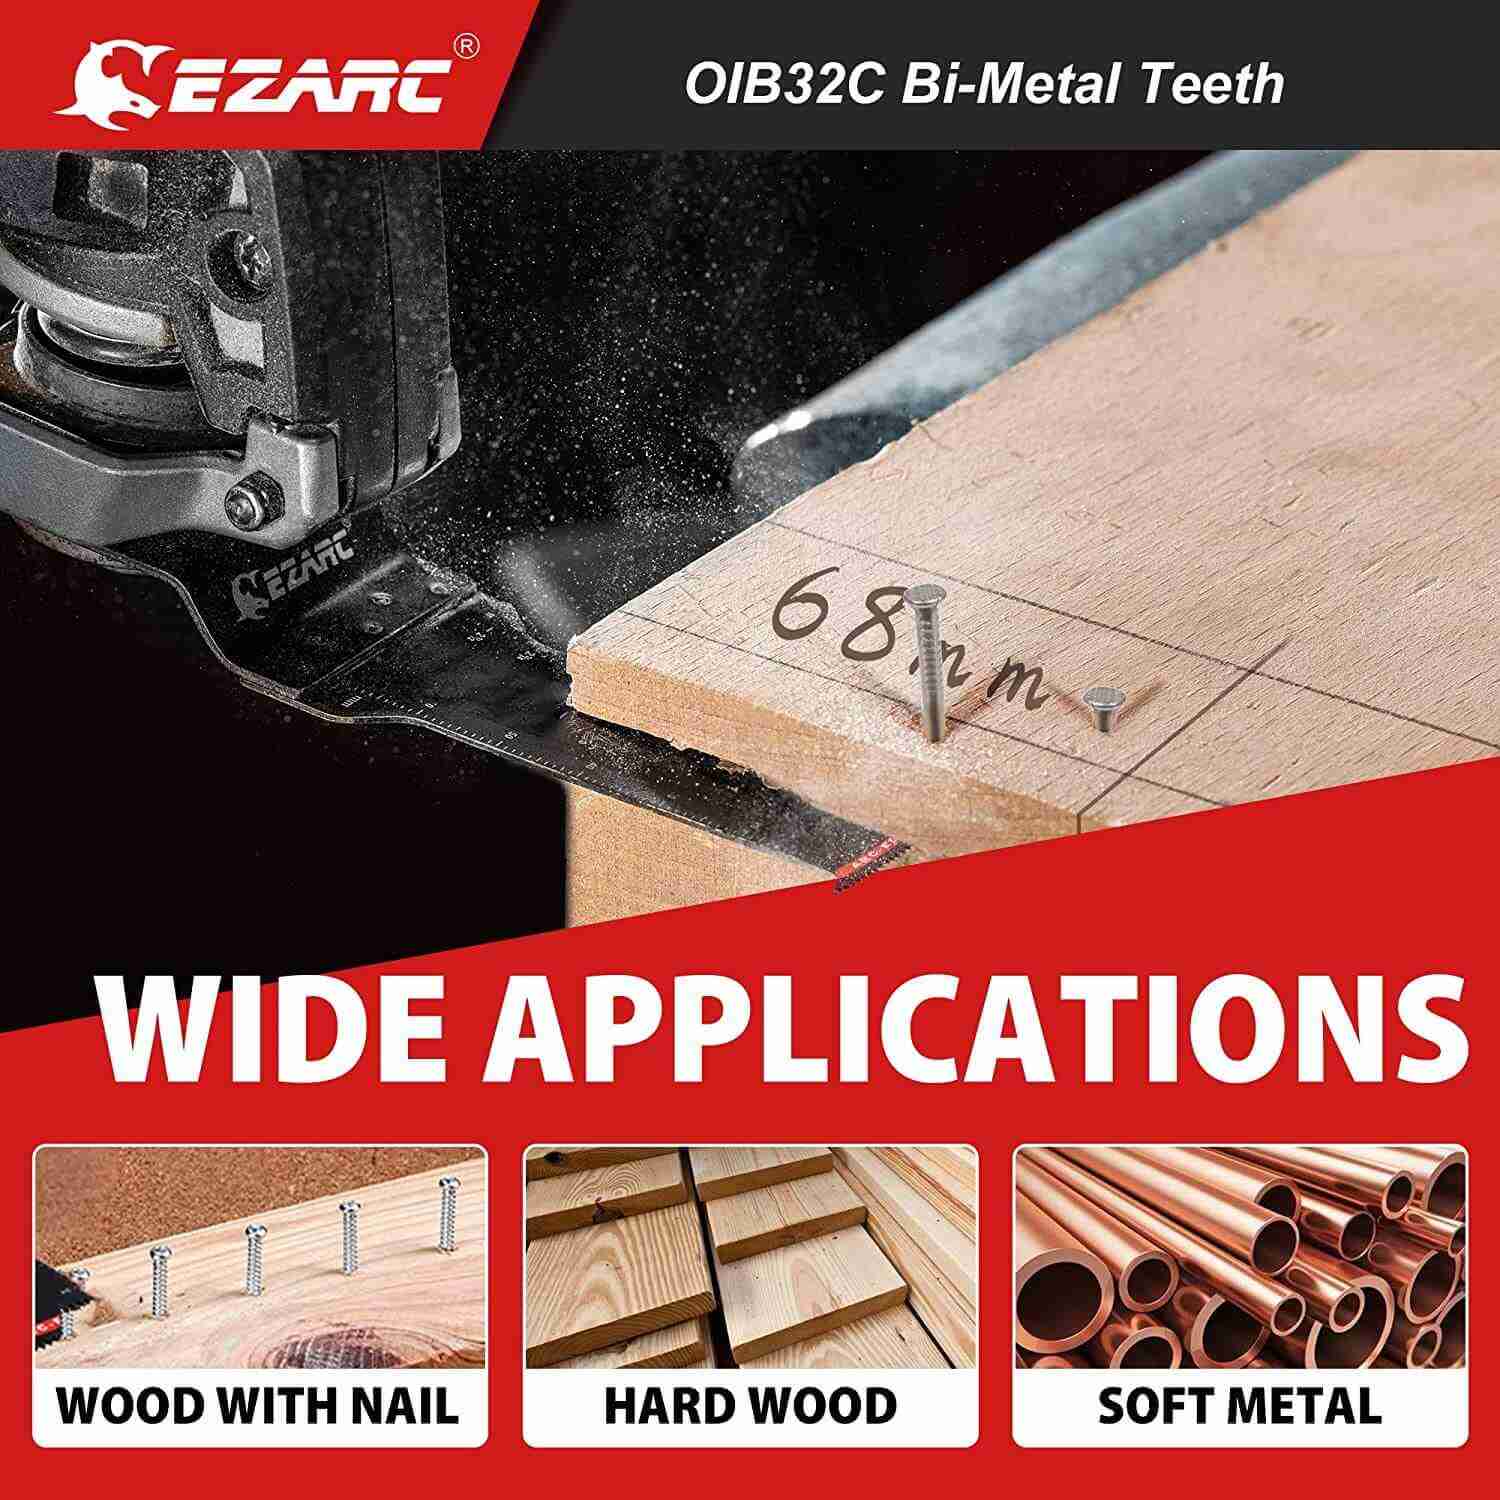 1-1/4 in. Extra-Long Reach Arc Edge Oscillating Multitool Blades For General Purpose,Bi-Metal & Japanese Teeth